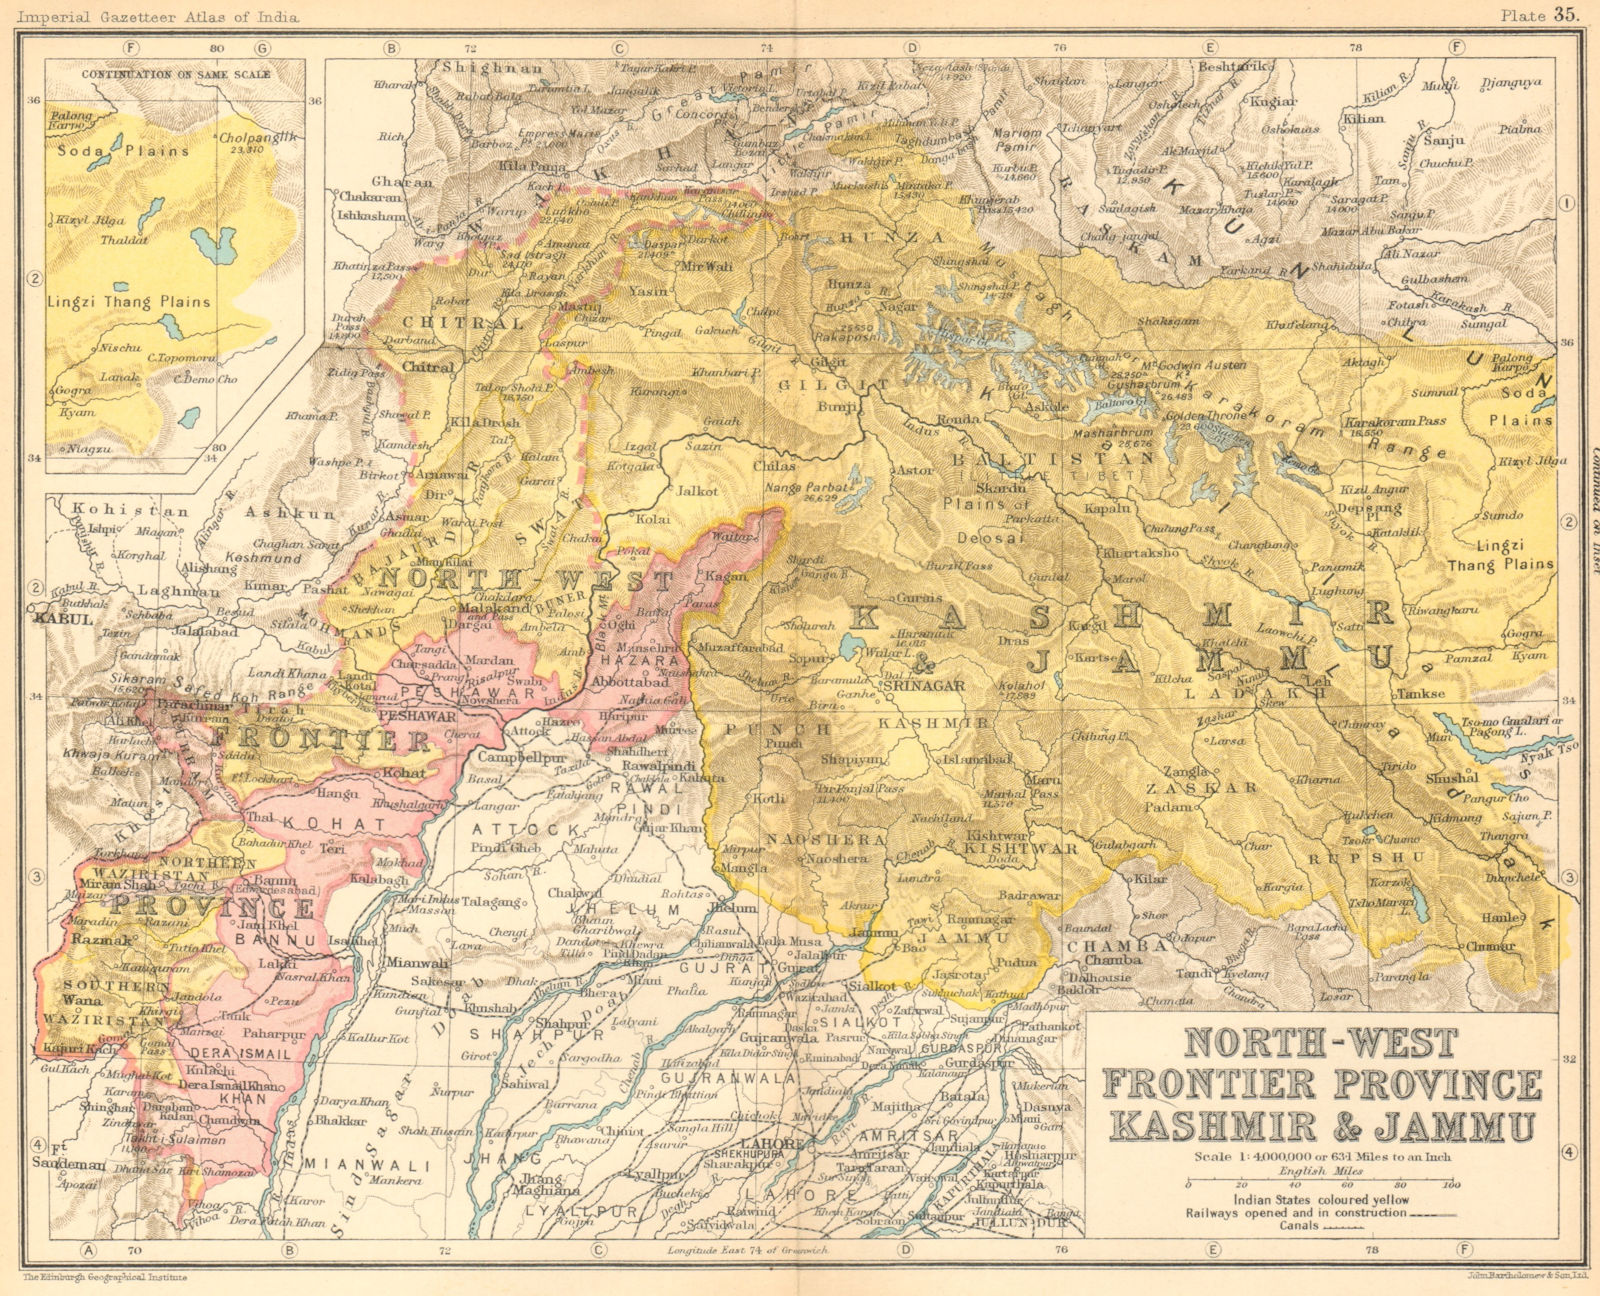 North-West Frontier Province, Jammu & Kashmir'. British India/Pakistan 1931 map